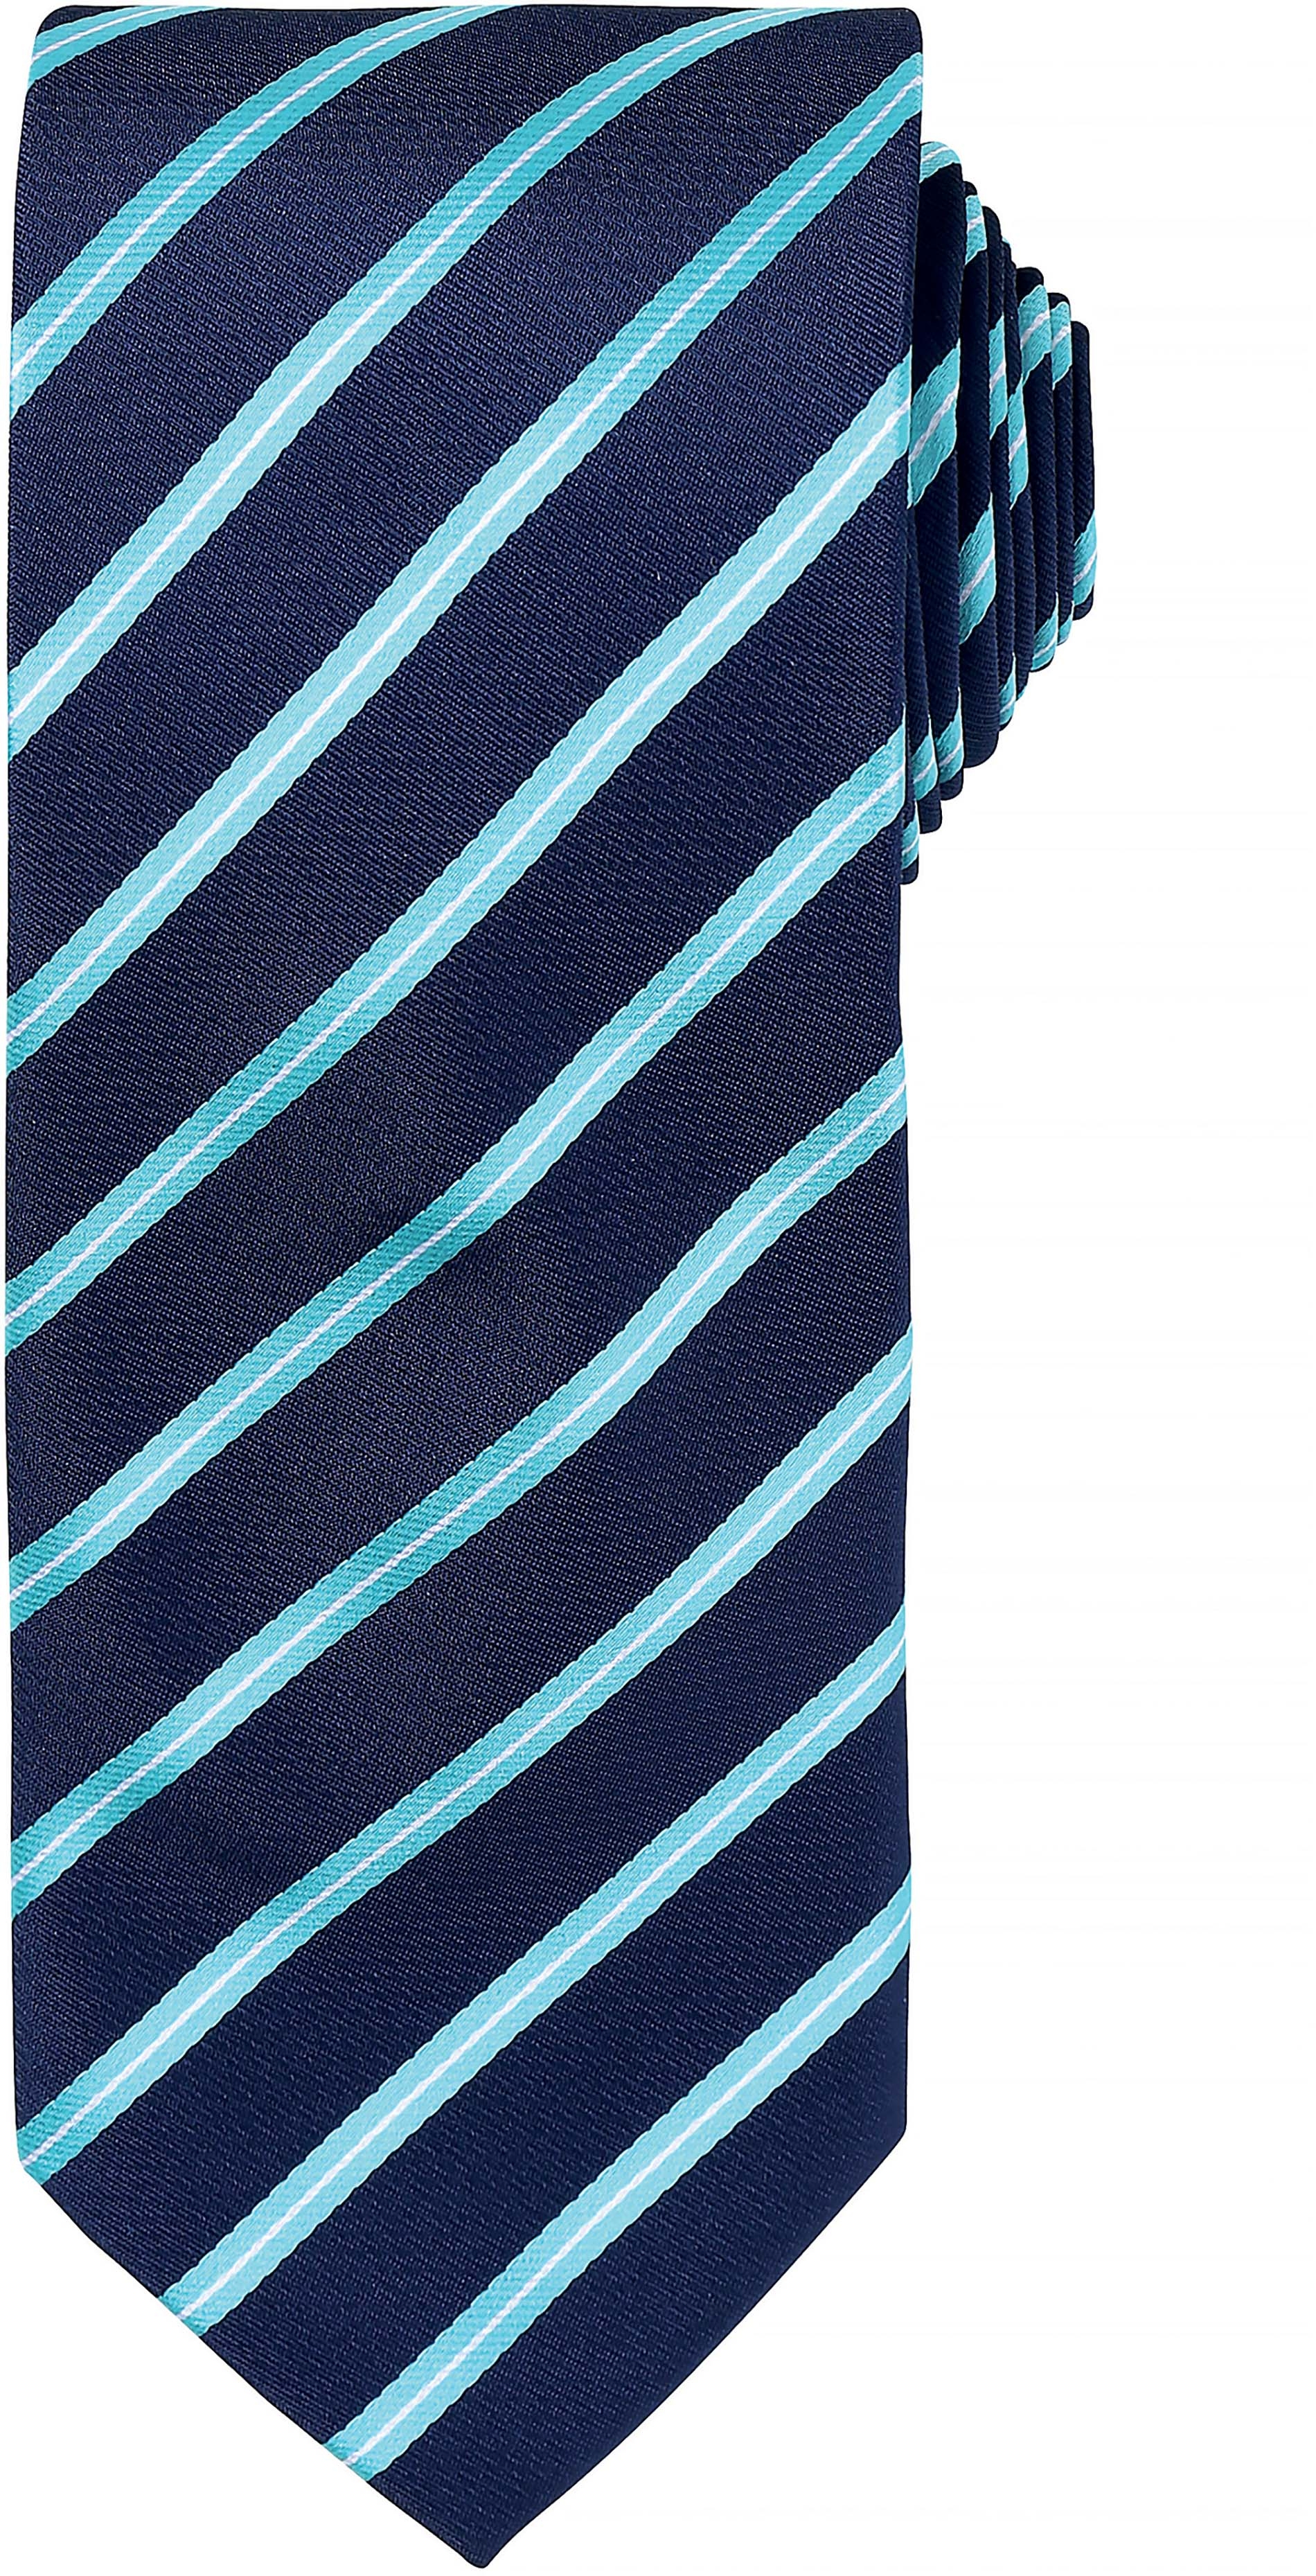 Cravate rayée sport Navy/Turquoise Bleu